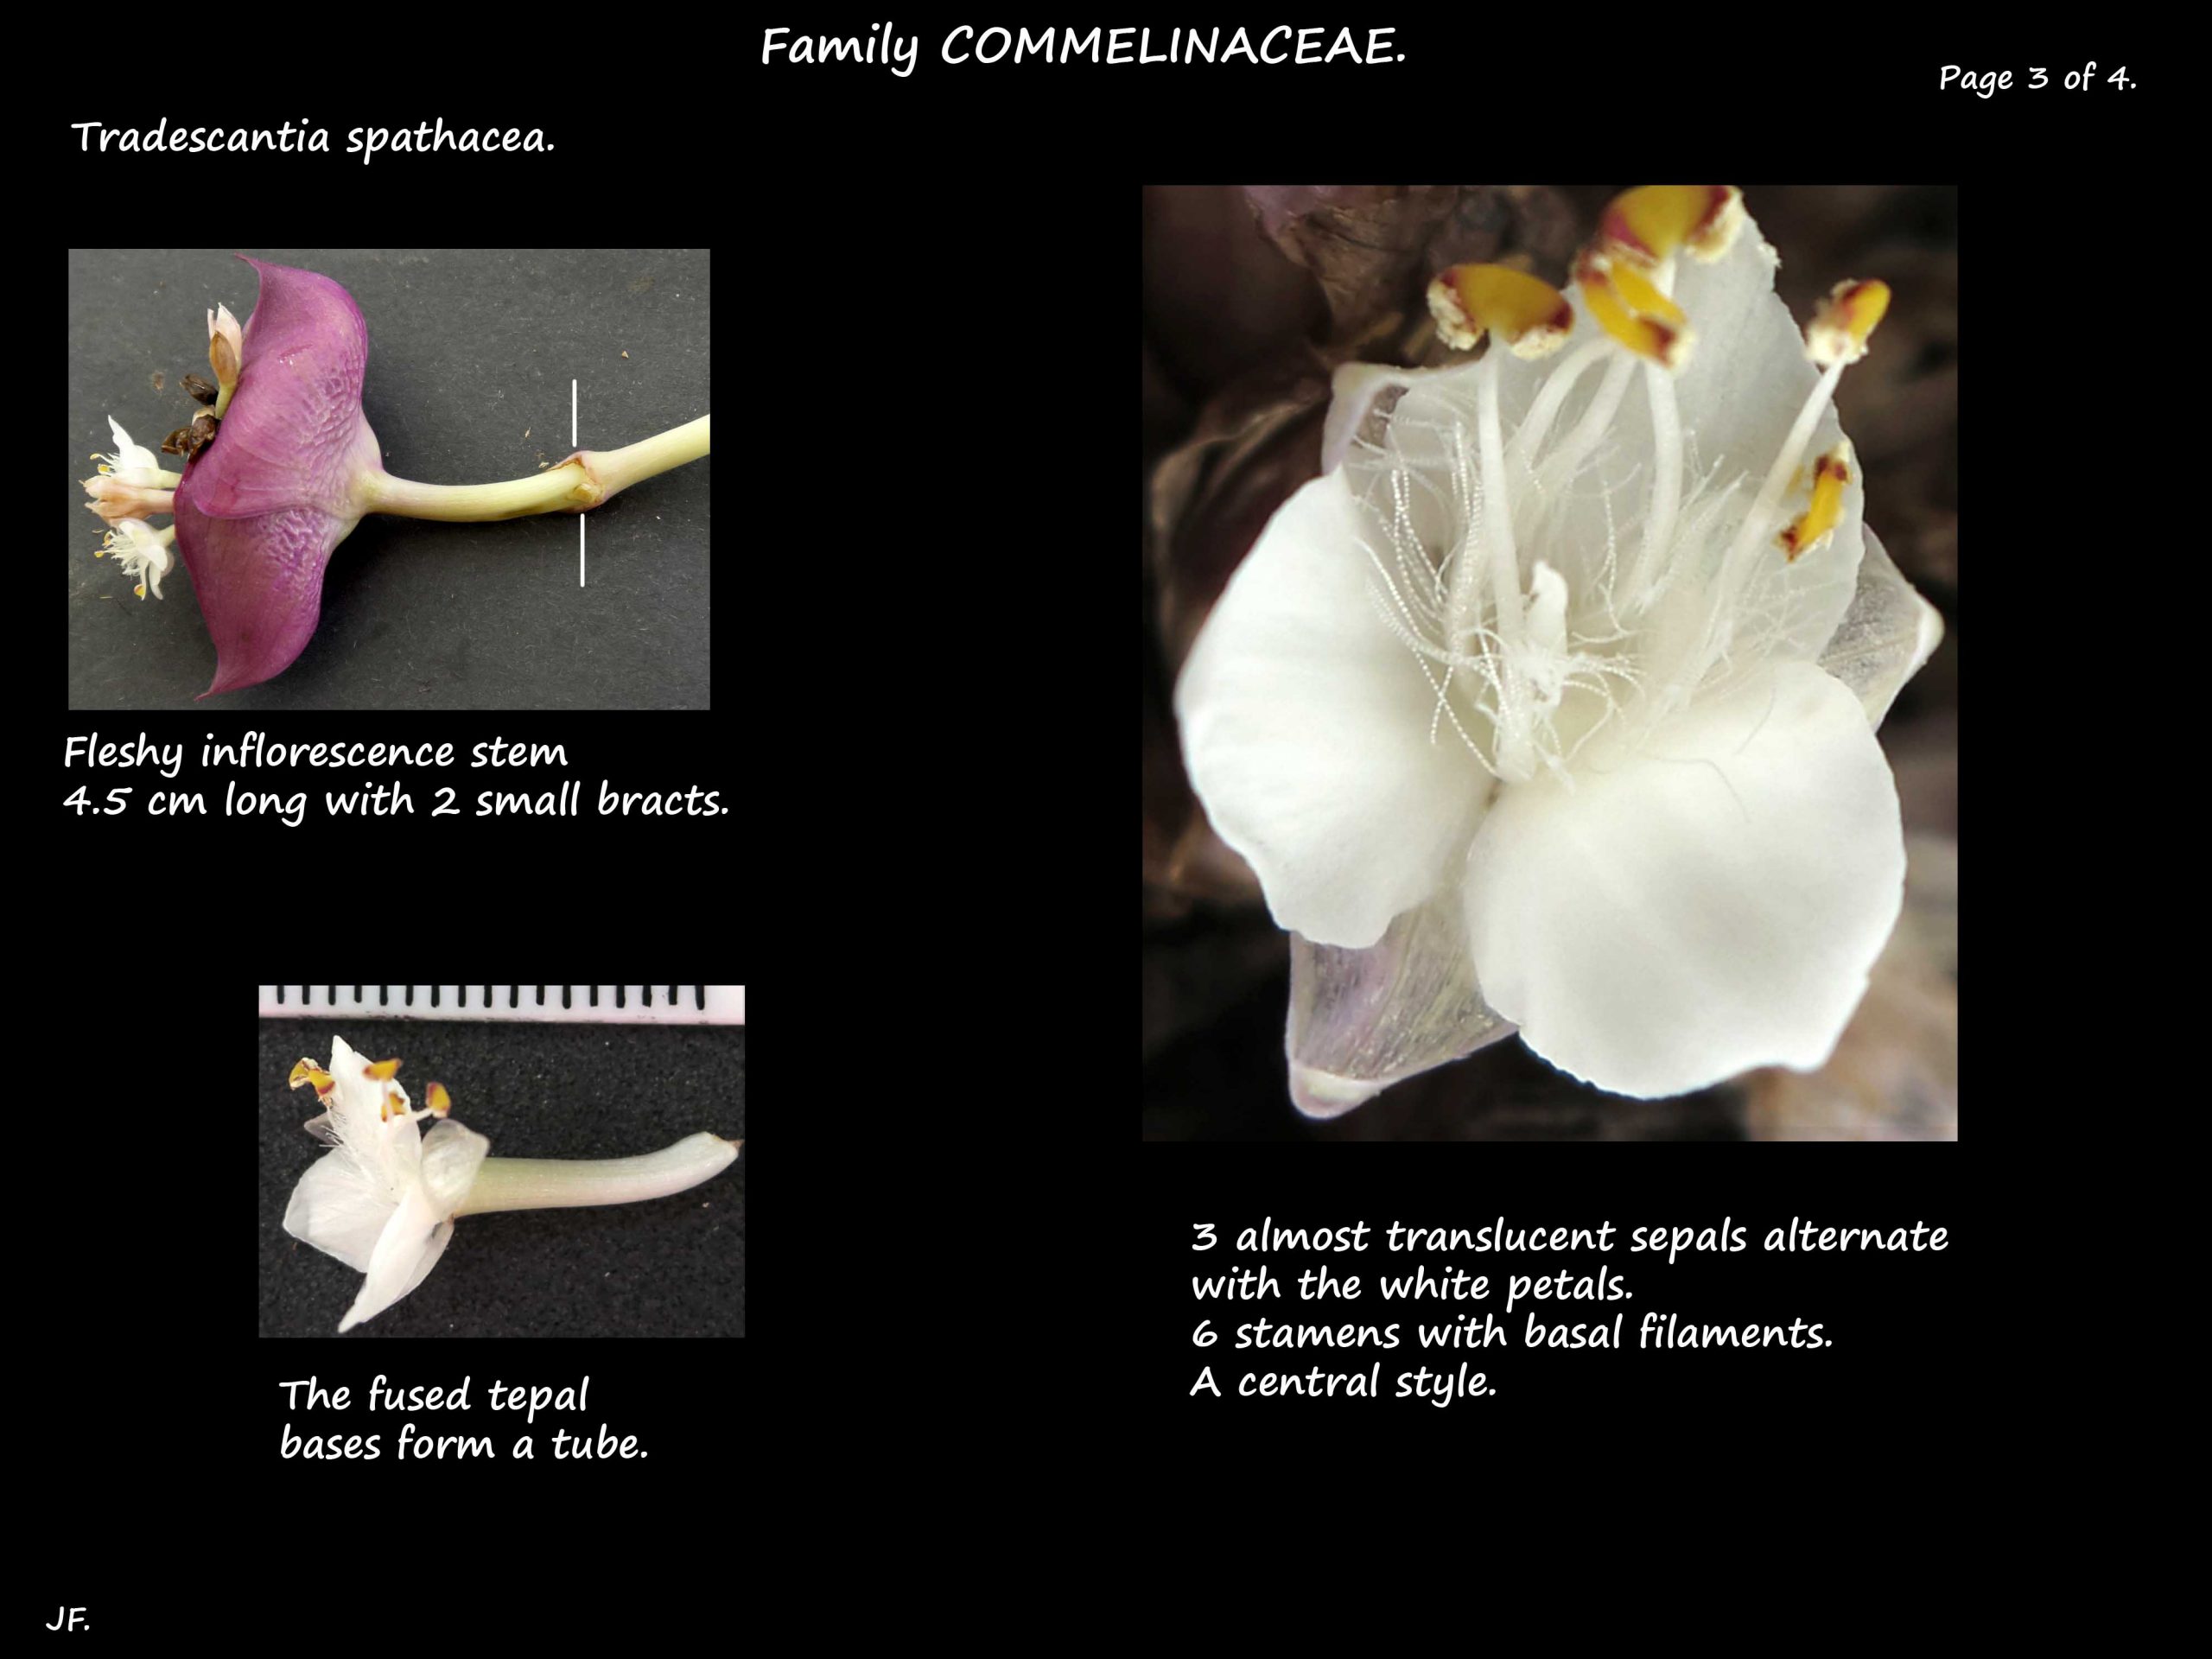 3 Tradescantia spathacea flower